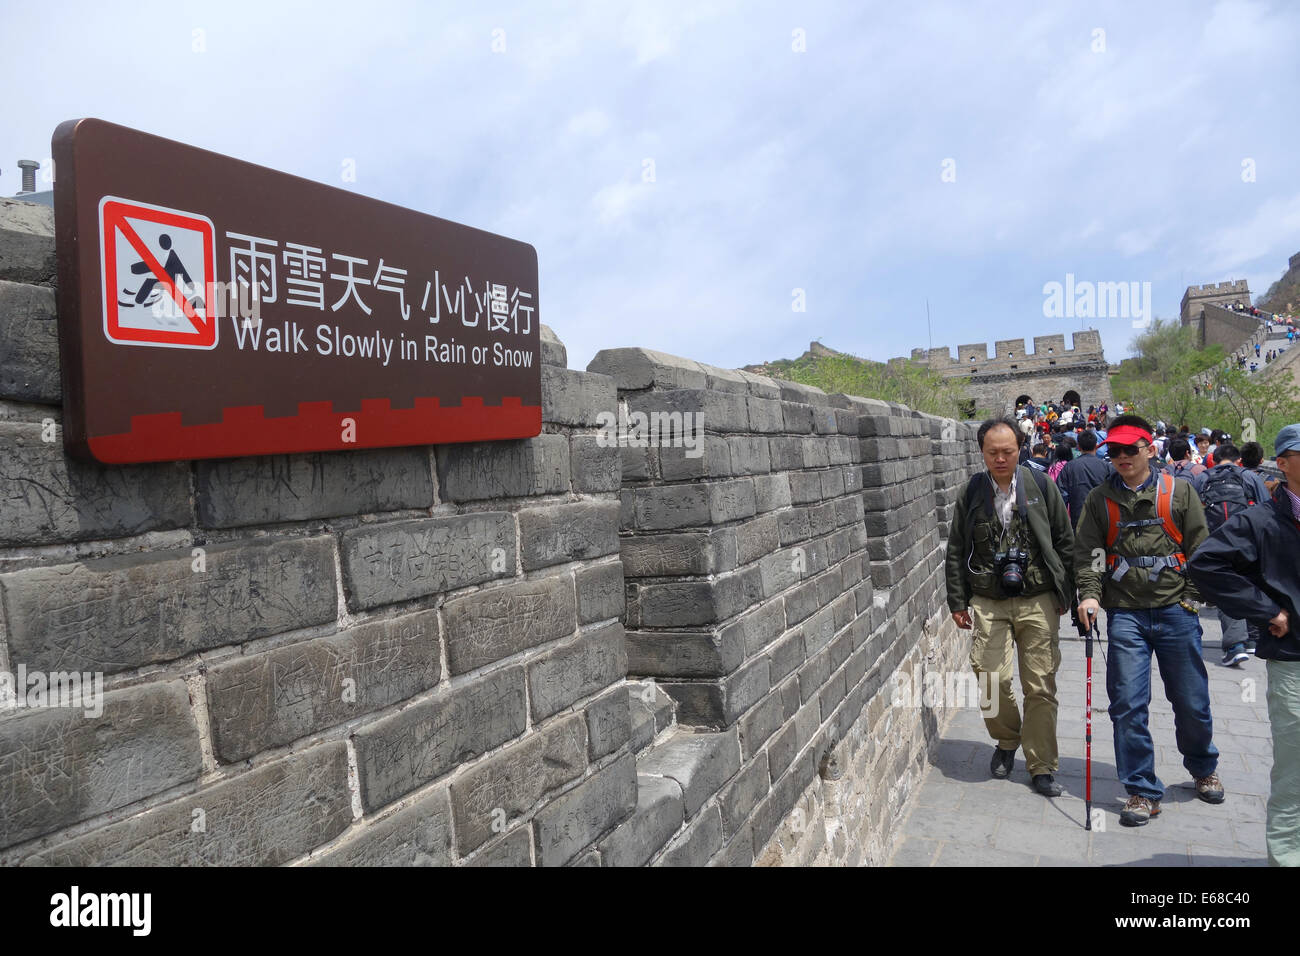 Great Wall of China sign warning to walk slowly in rain or snow, China, Great Wall of China, People's Republic of China Stock Photo